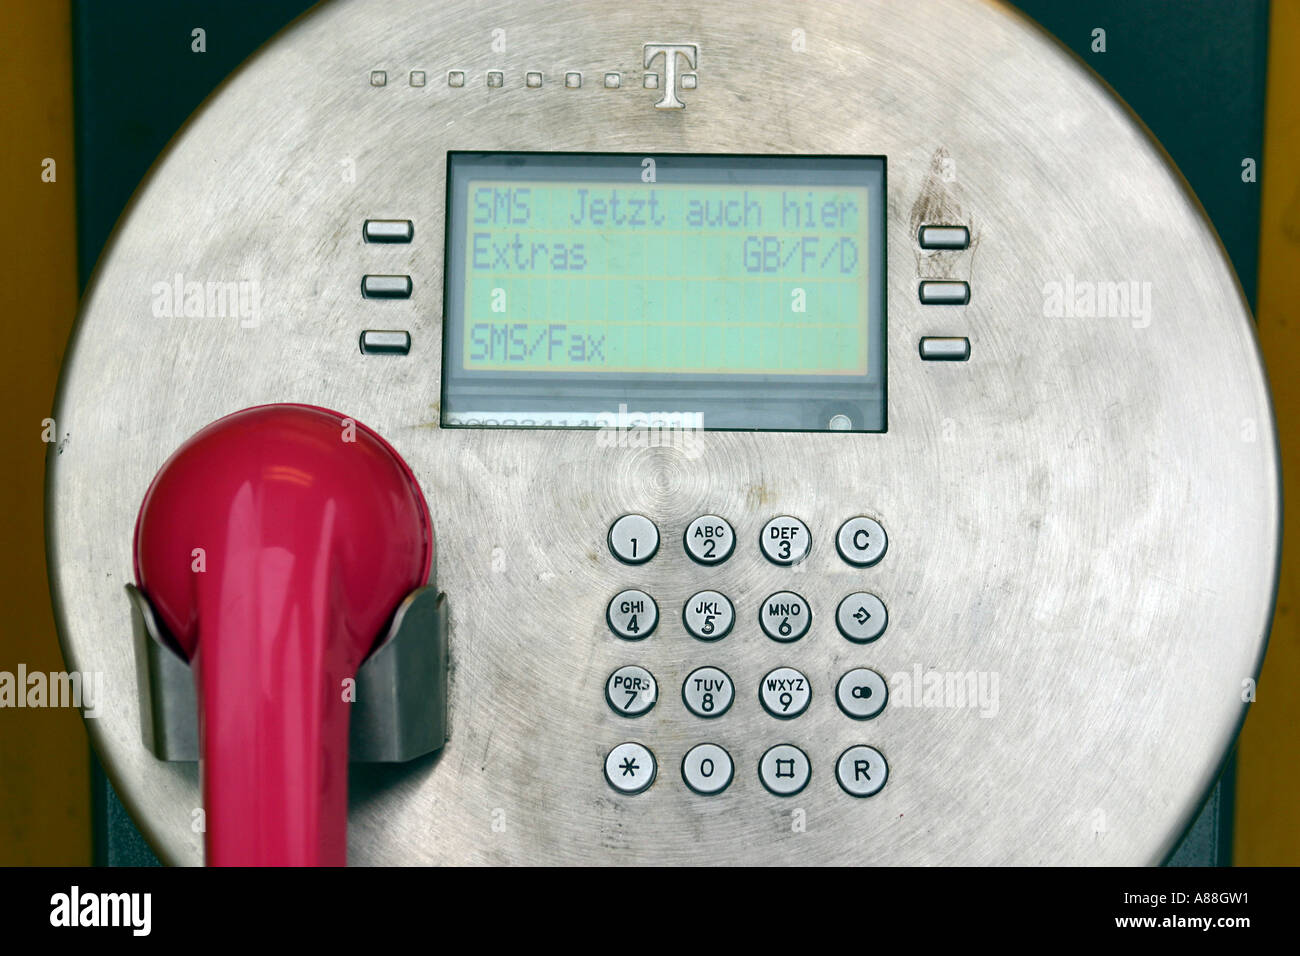 Telephone keys of a public phone of german telecom provider Deutsche Telekom are seen in Hamburg, Germany Stock Photo